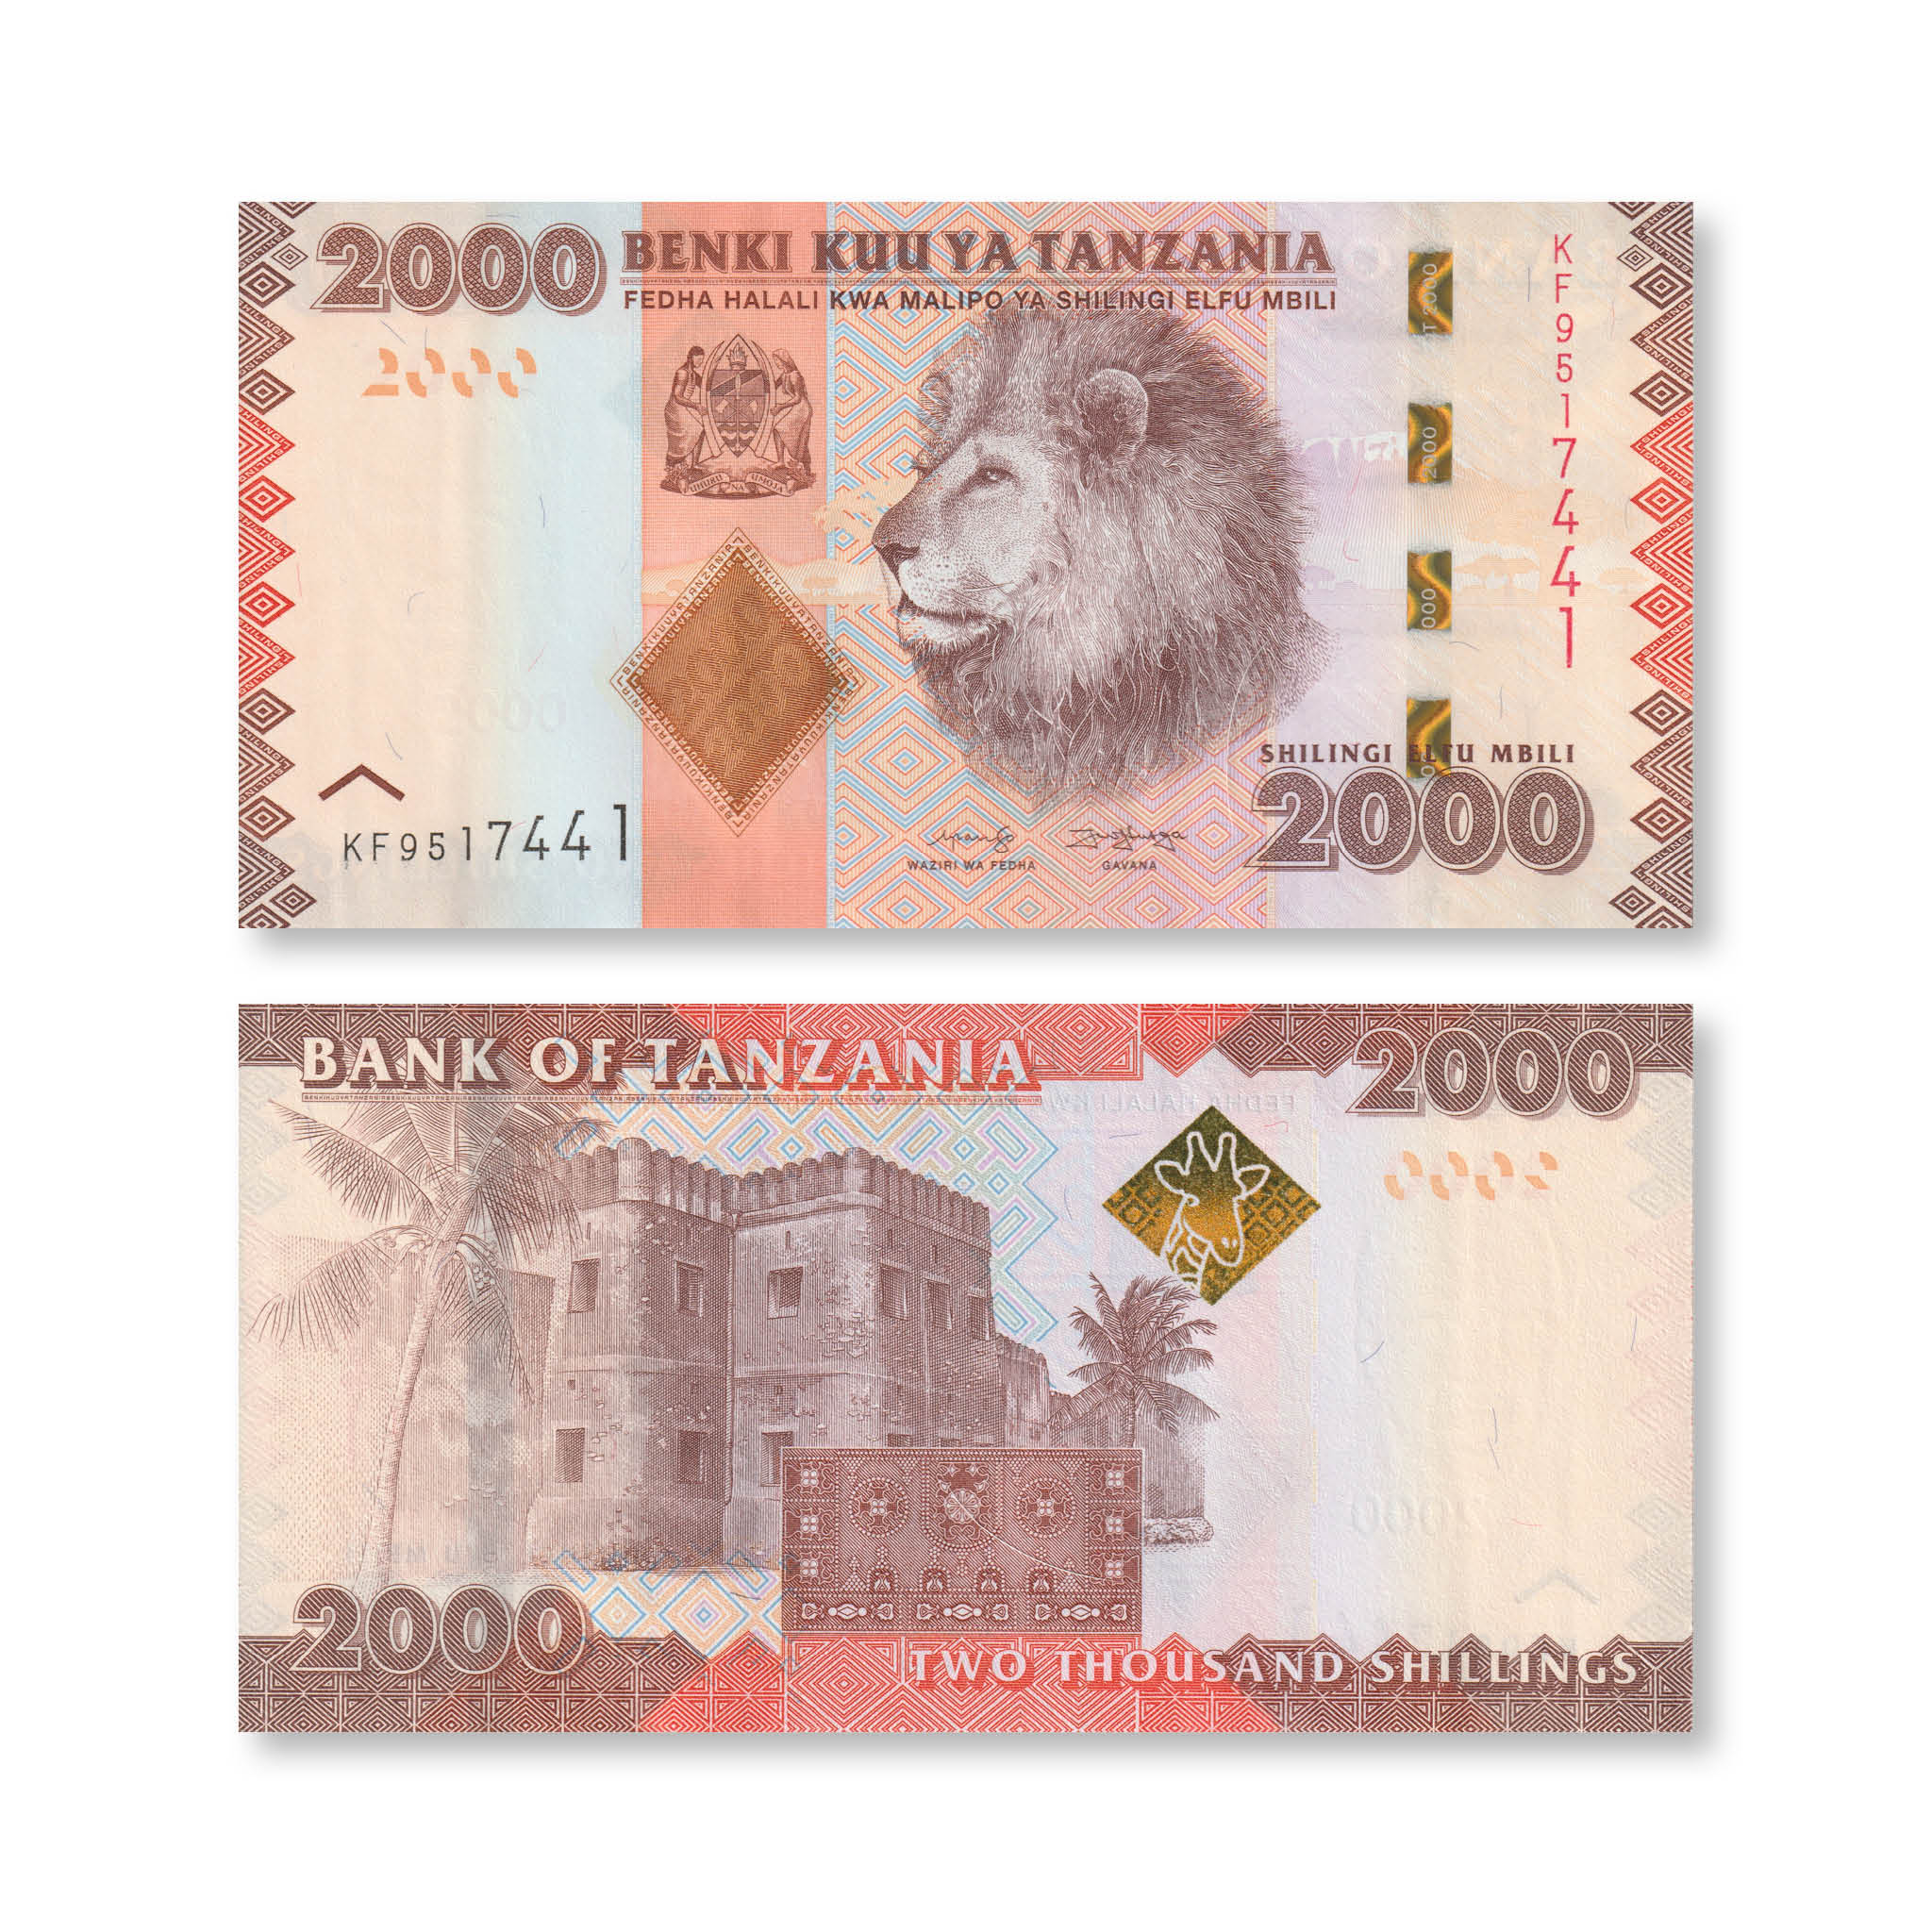 Tanzania 2000 Shilingi, 2020, B141c, P42, UNC - Robert's World Money - World Banknotes